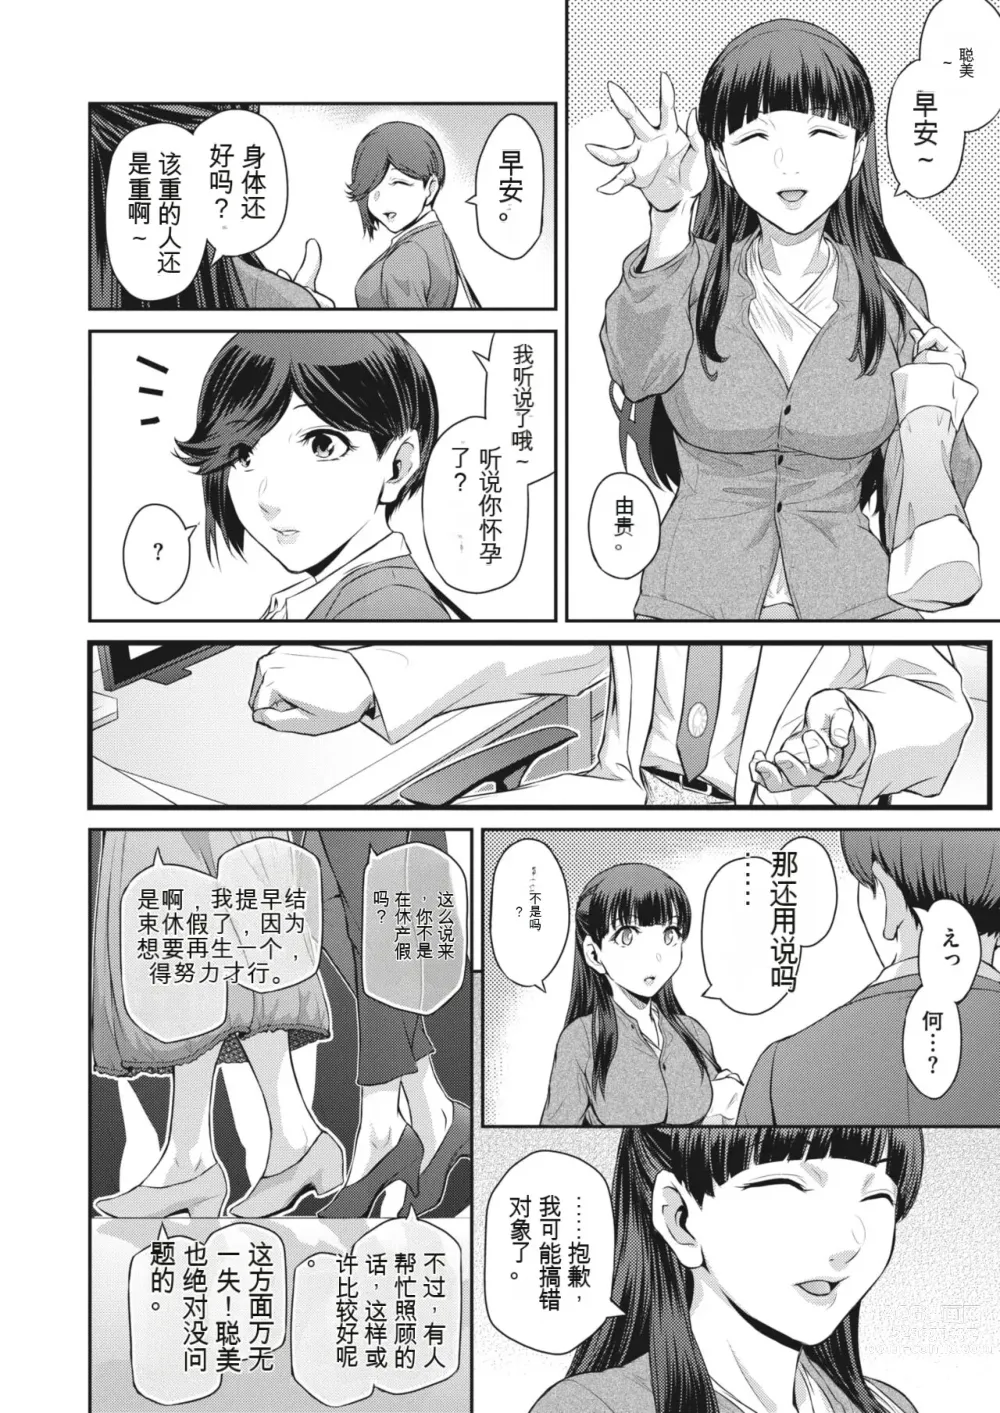 Page 92 of manga Affinity Ch.1-5